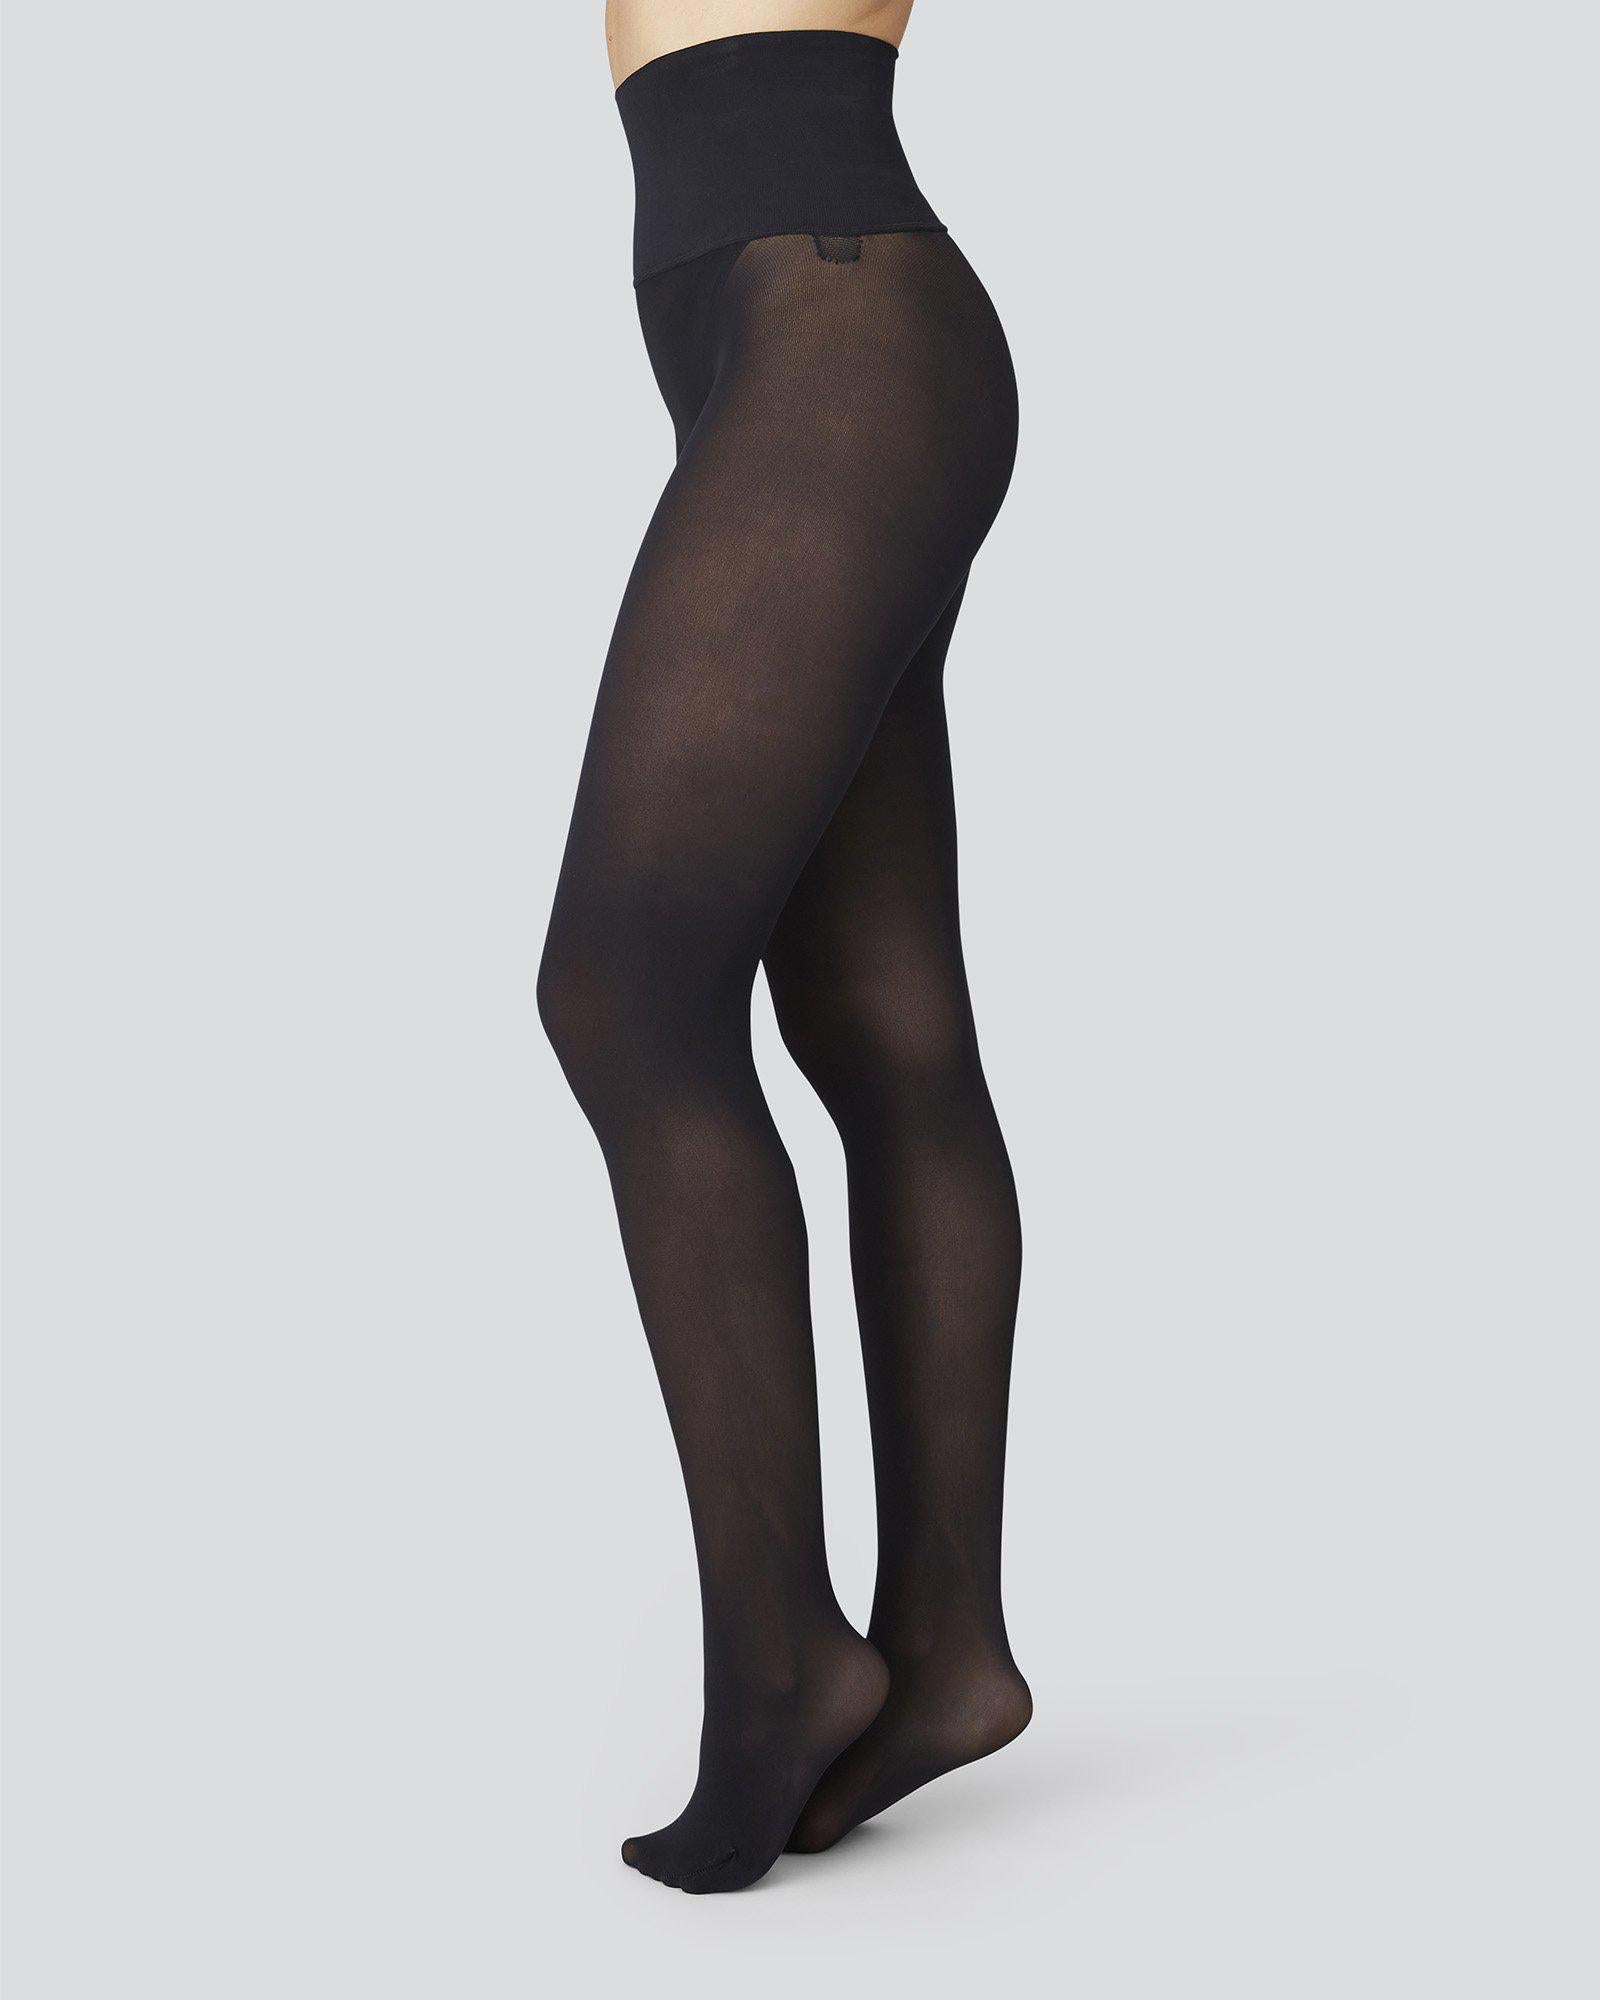 Pantyhose for Women，Panty Hose Black Sheer Hosiery Seamless Pantyhose  Stocking